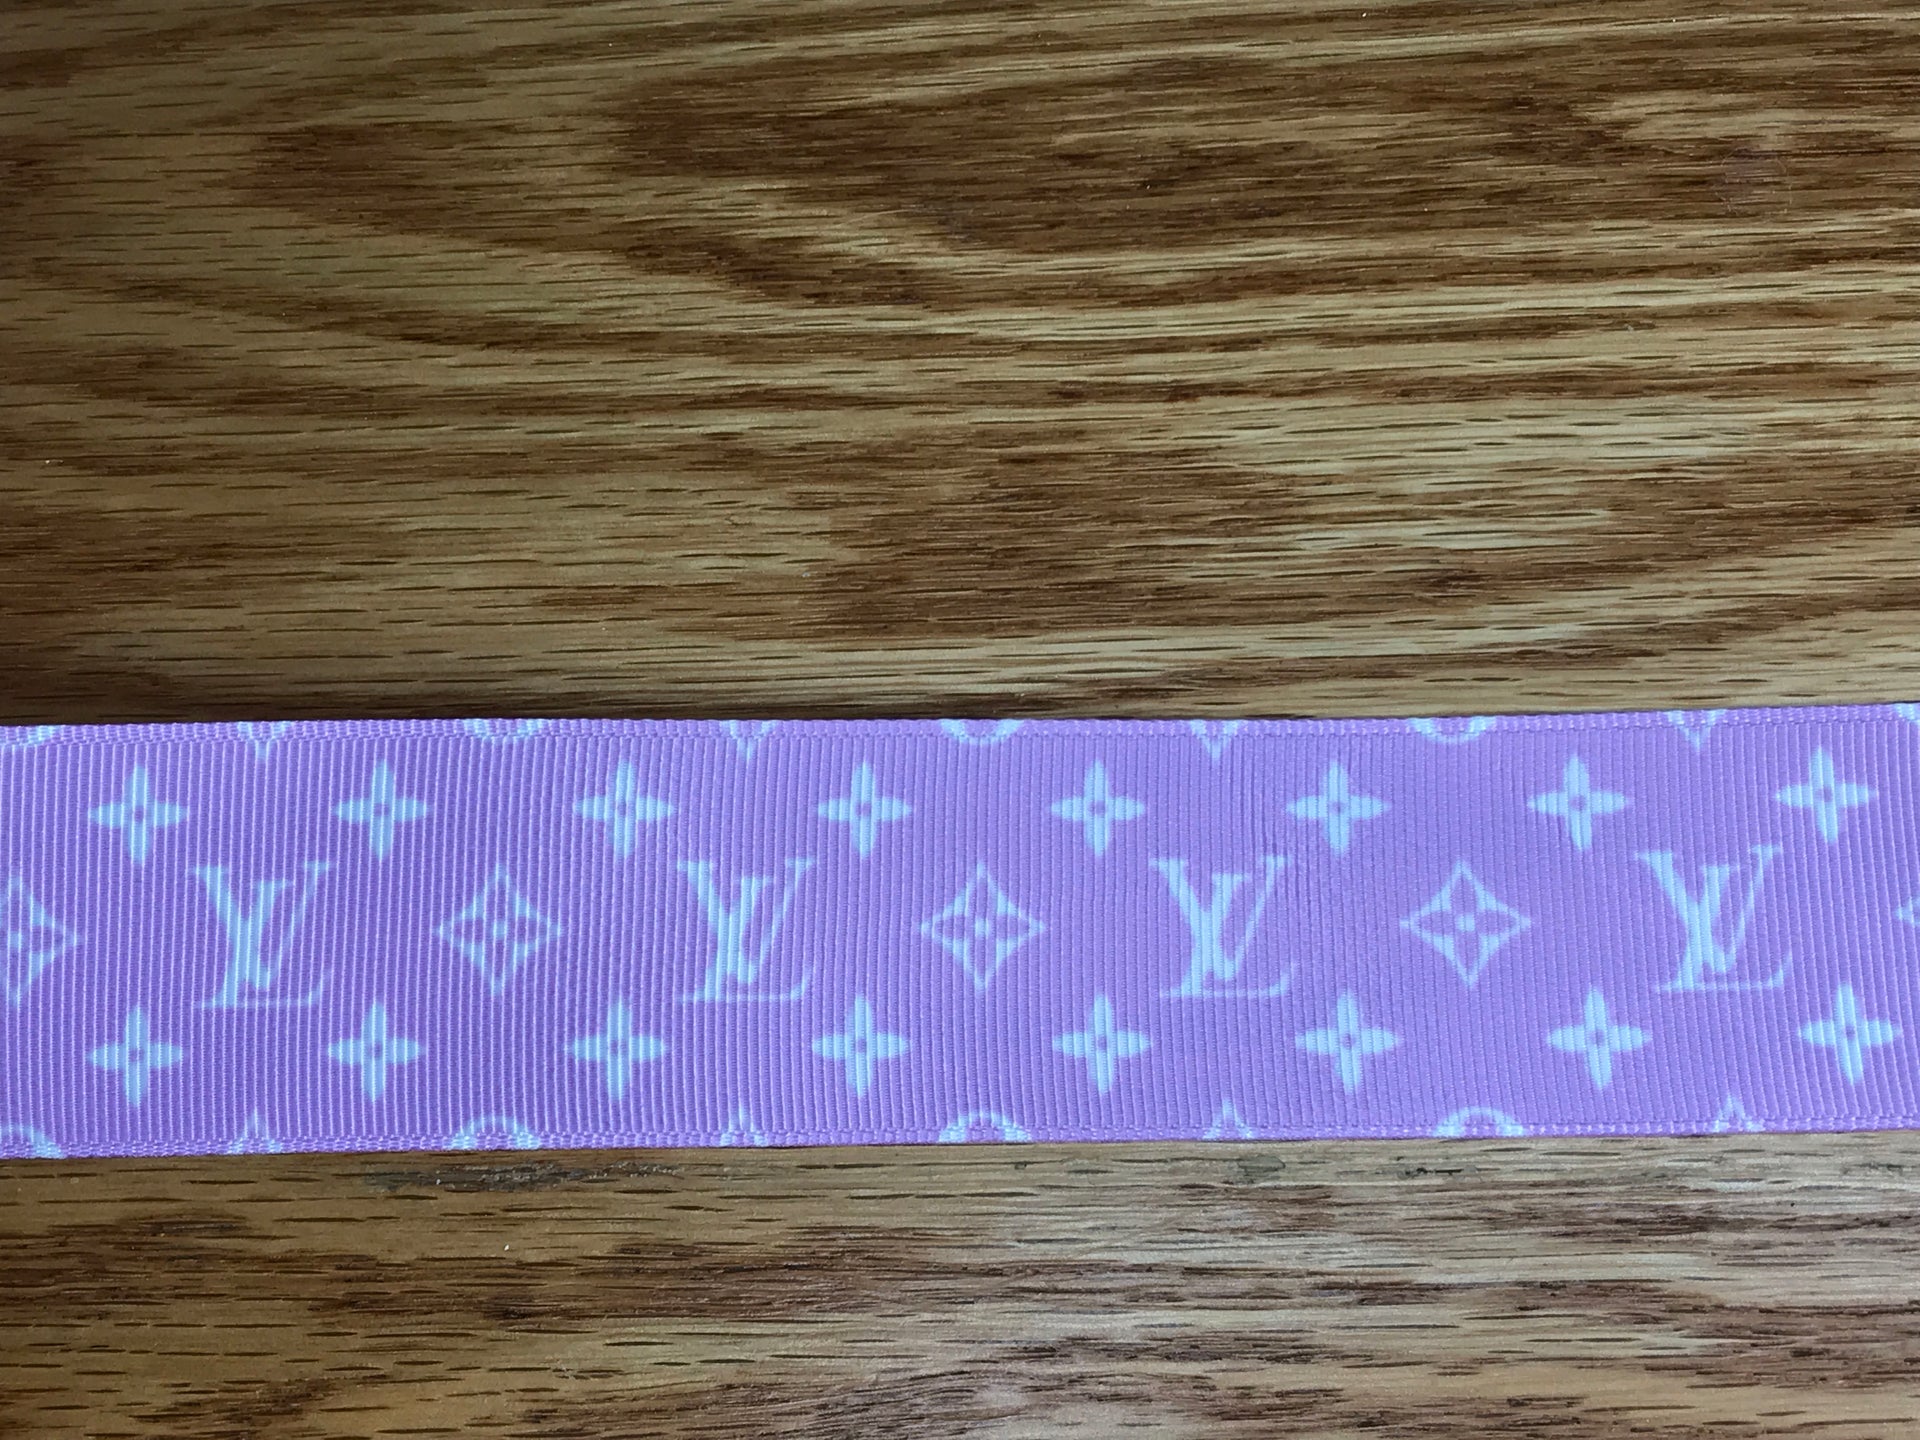 Louis Vuitton Purple Belt